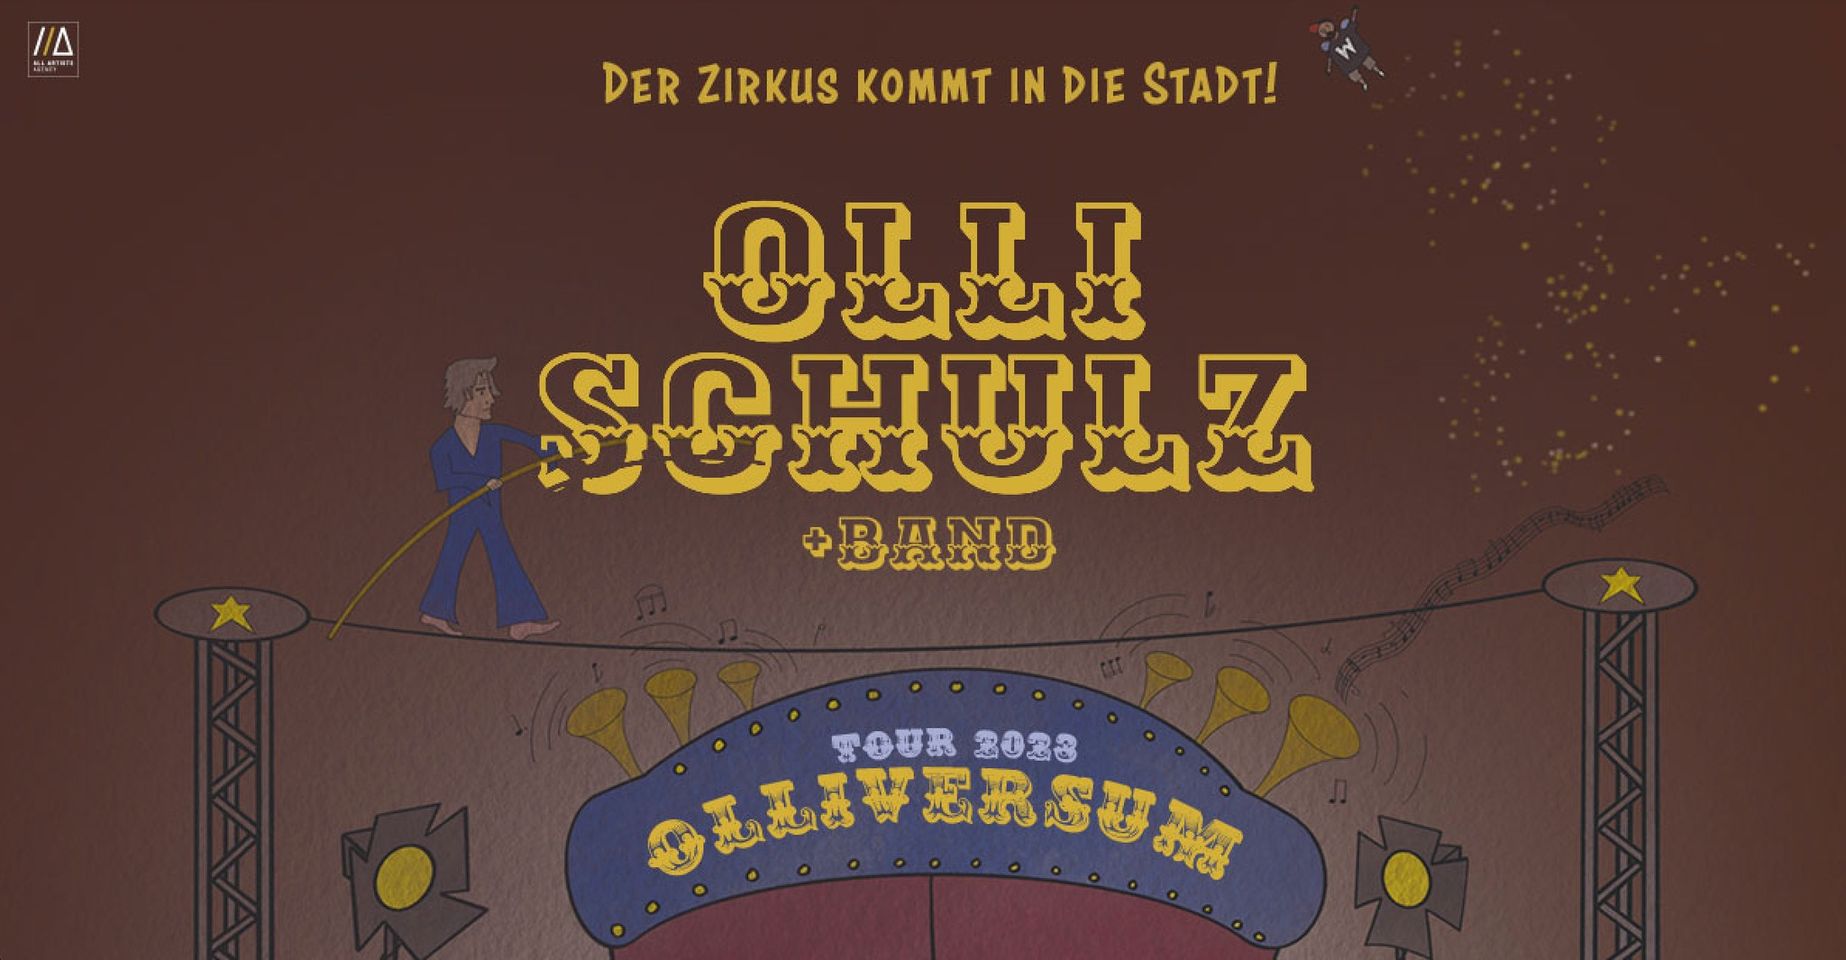 OLLI SCHULZ & BAND am 19. November 2023 @ Arena Wien.